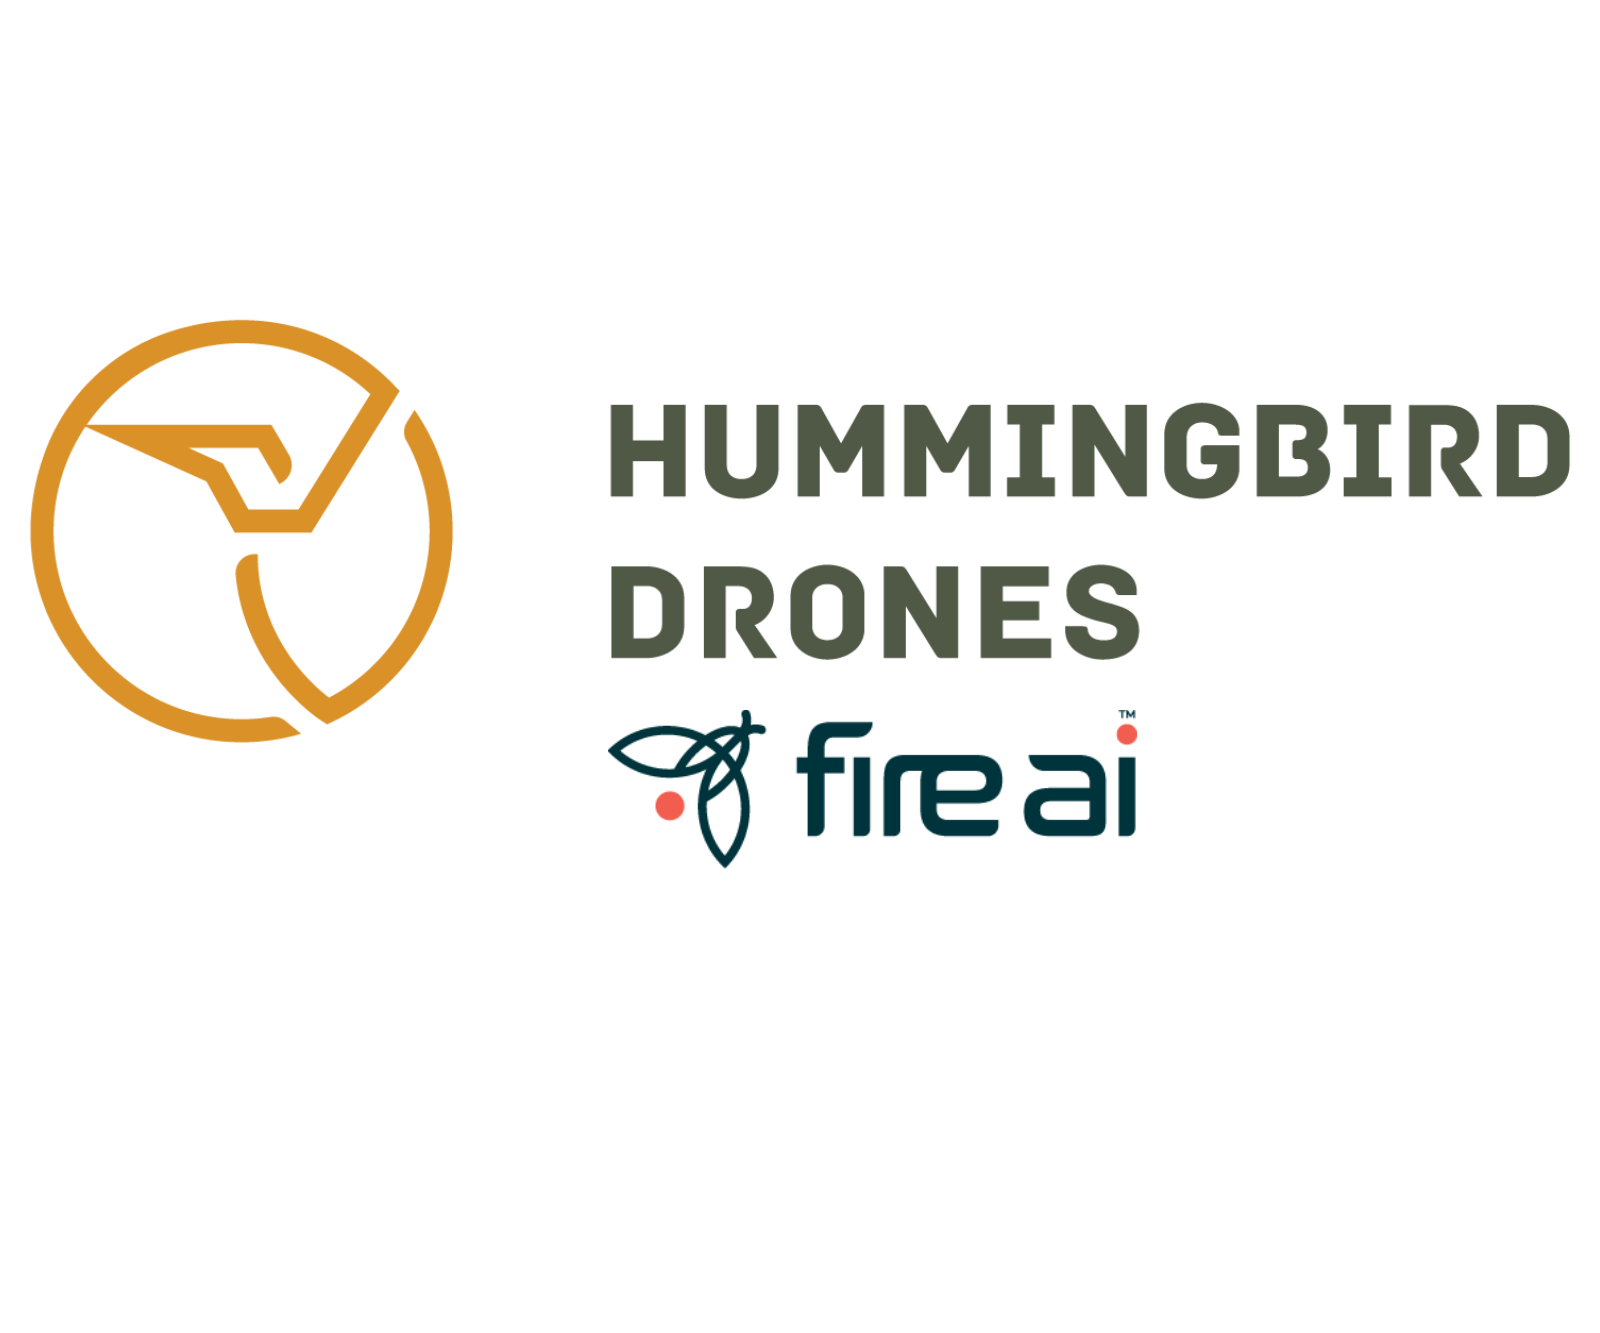 Hummingbird drones